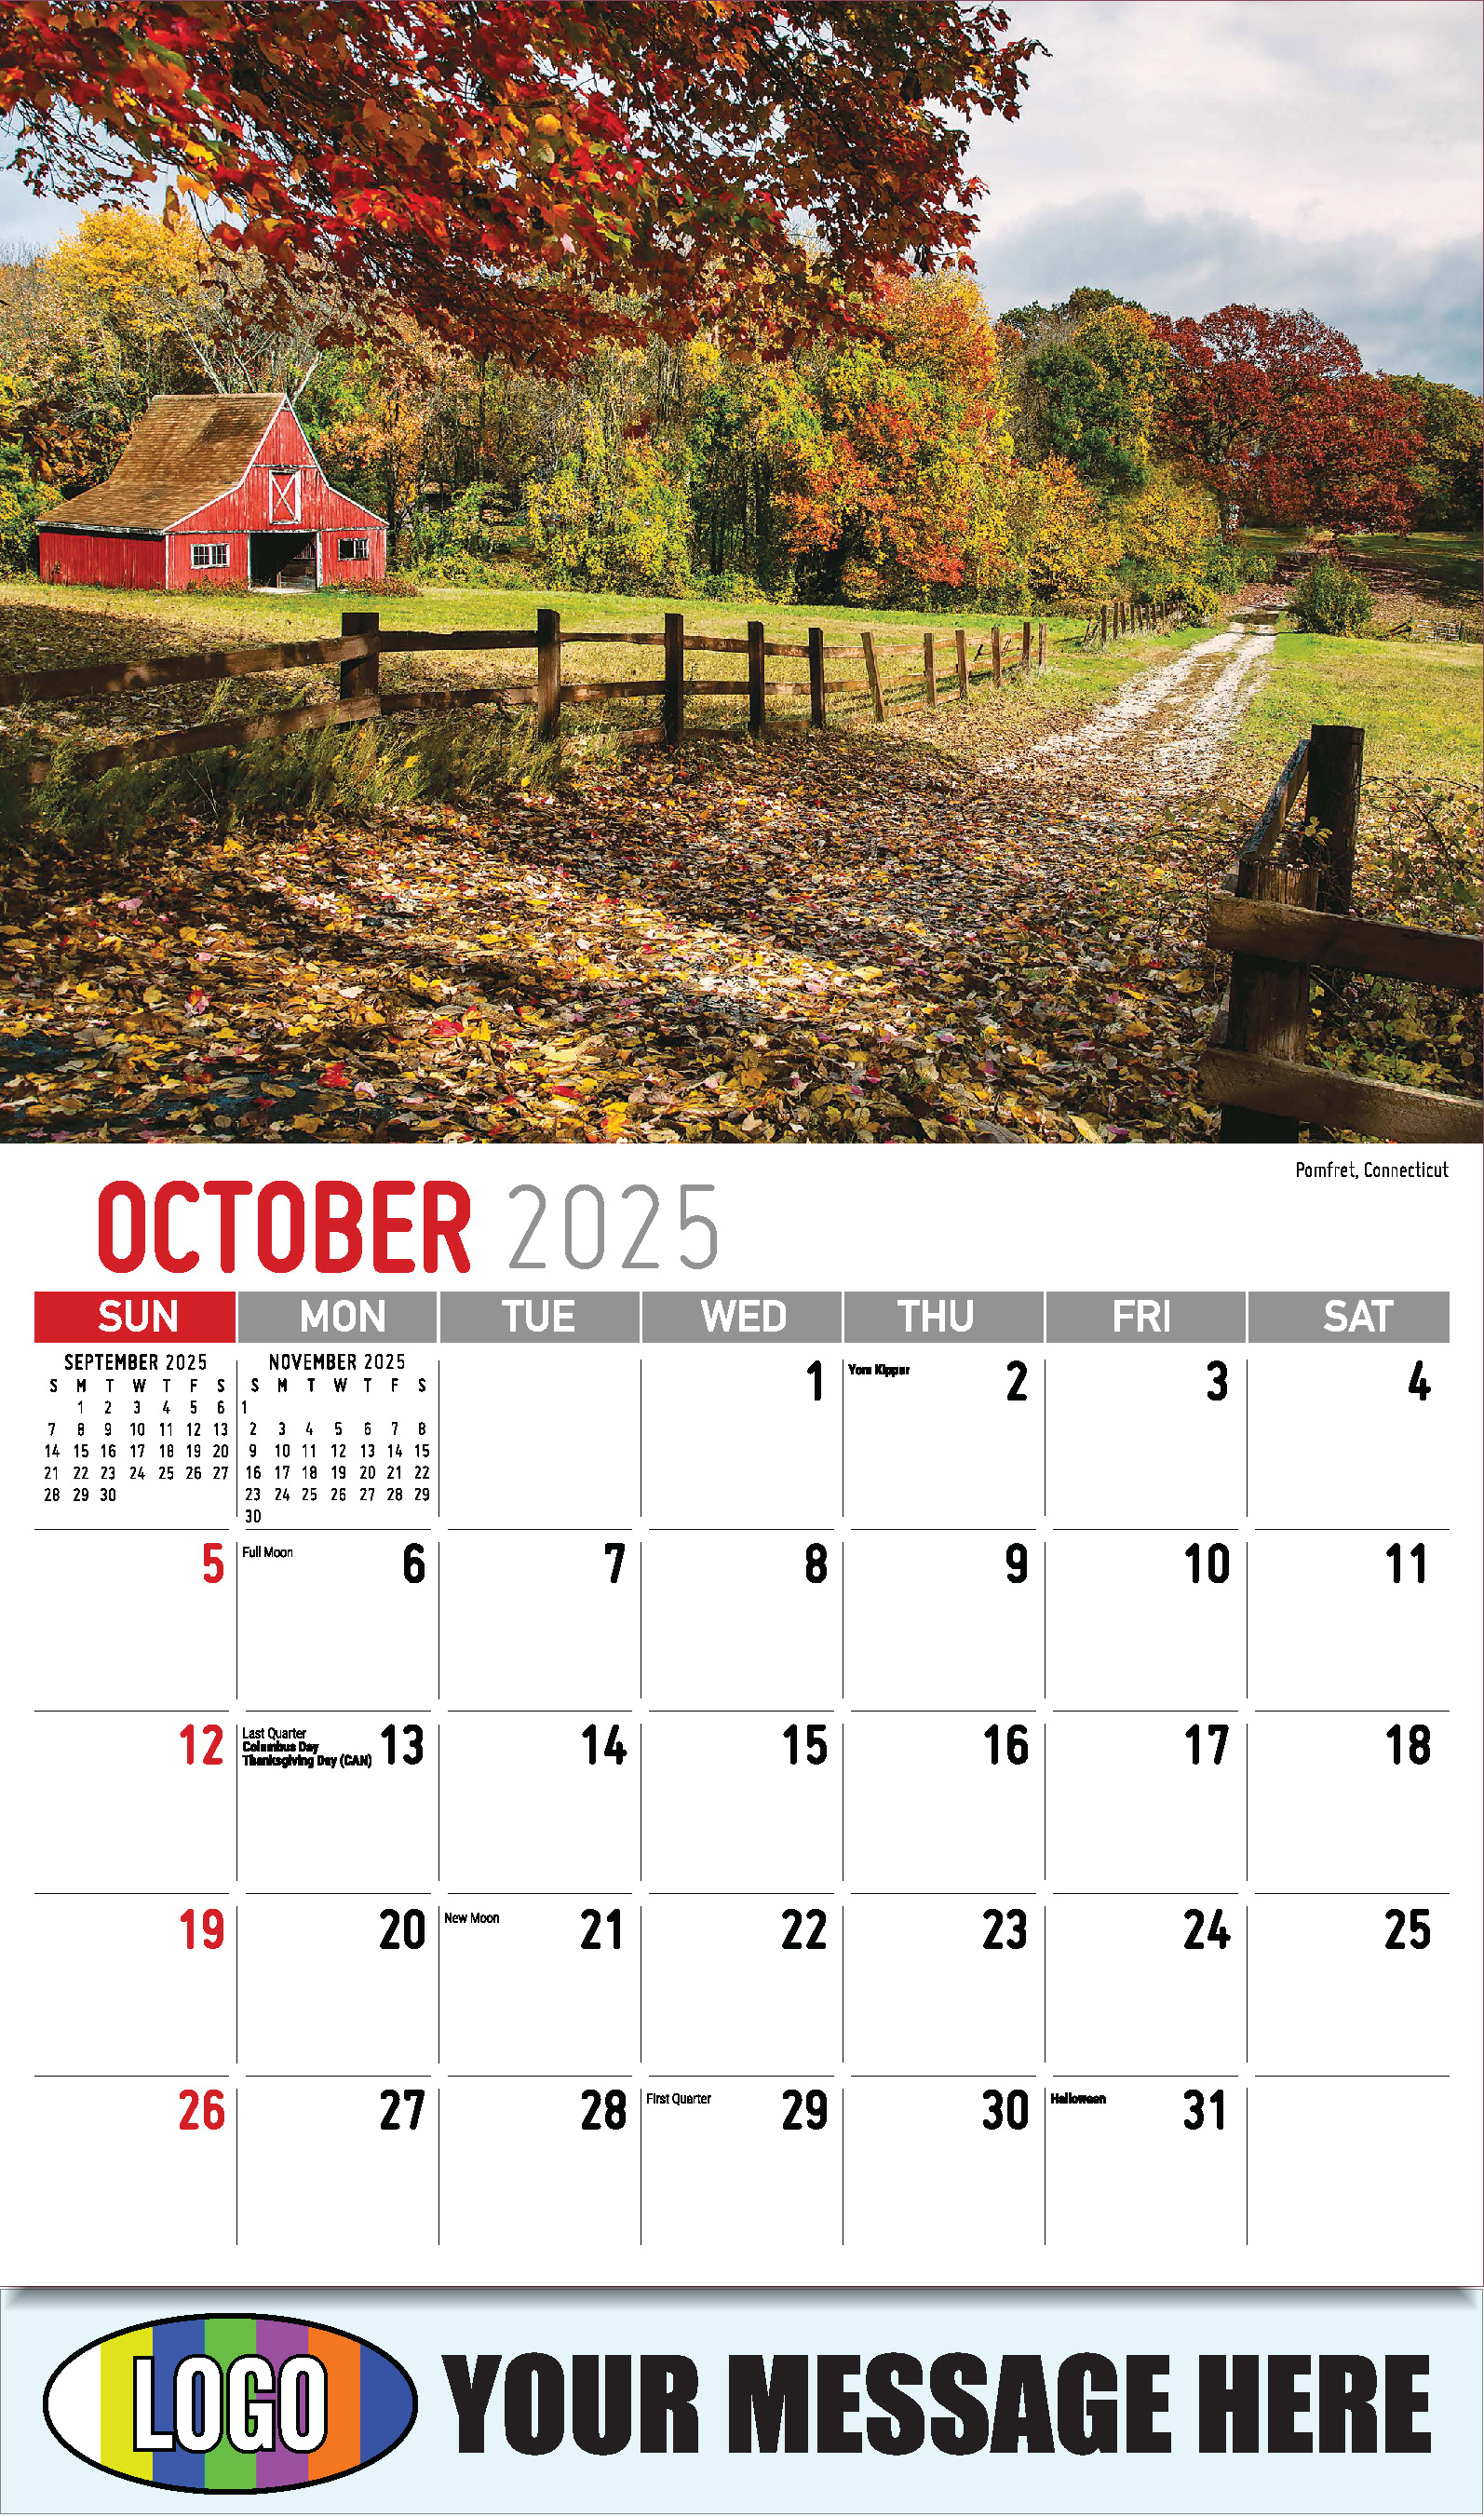 Scenes of America 2025 Business Advertising Wall Calendar - October